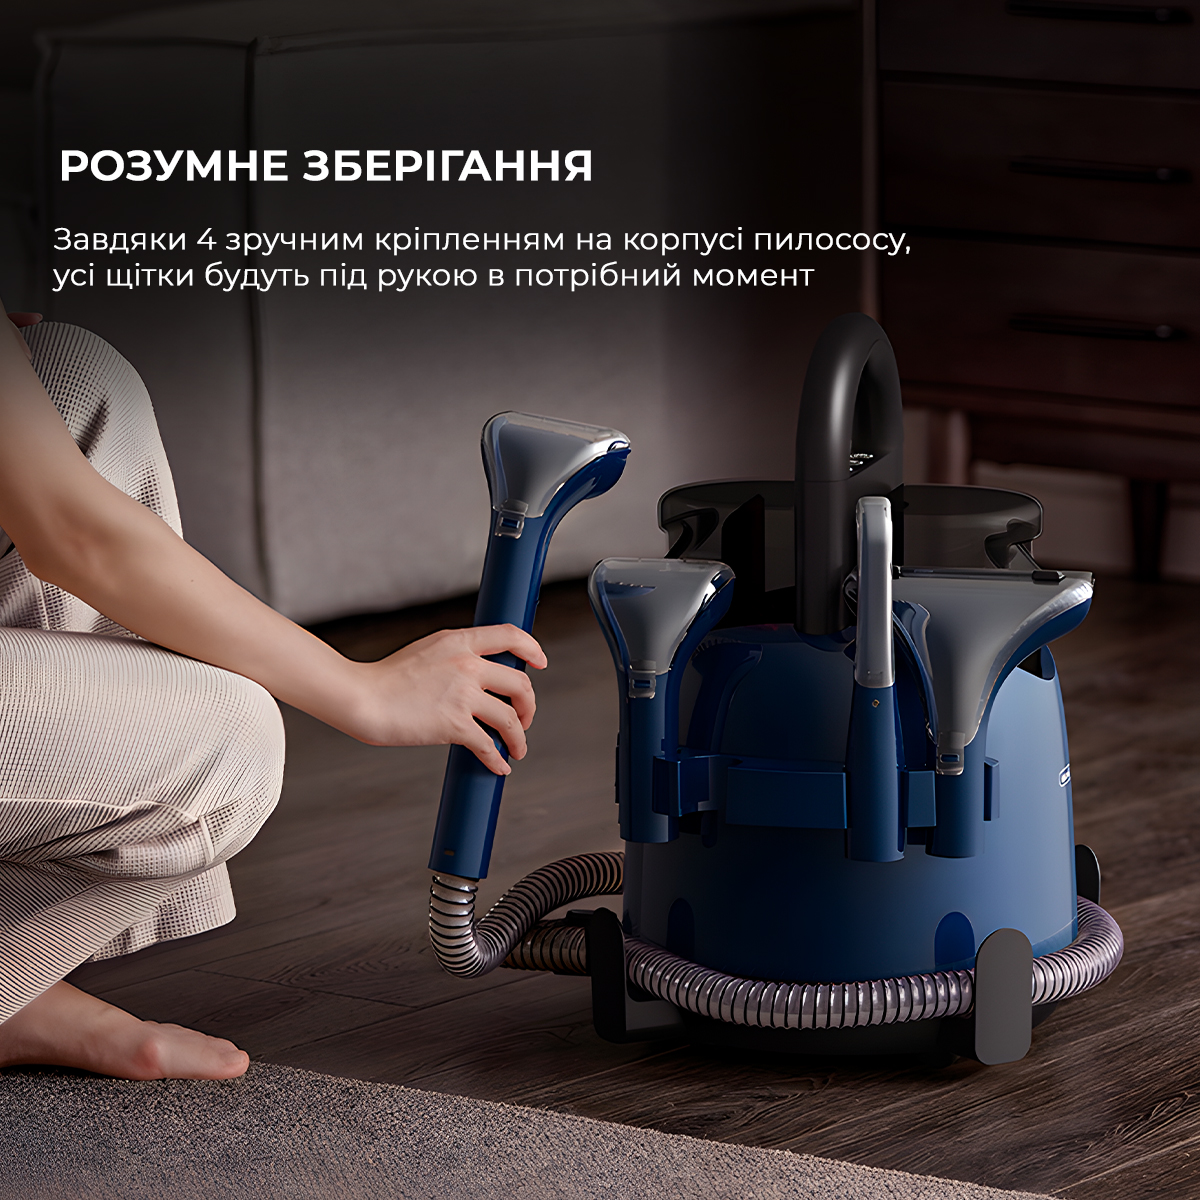 Пылесос Deerma Suction Vacuum Cleaner (DEM-BY200) обзор - фото 8